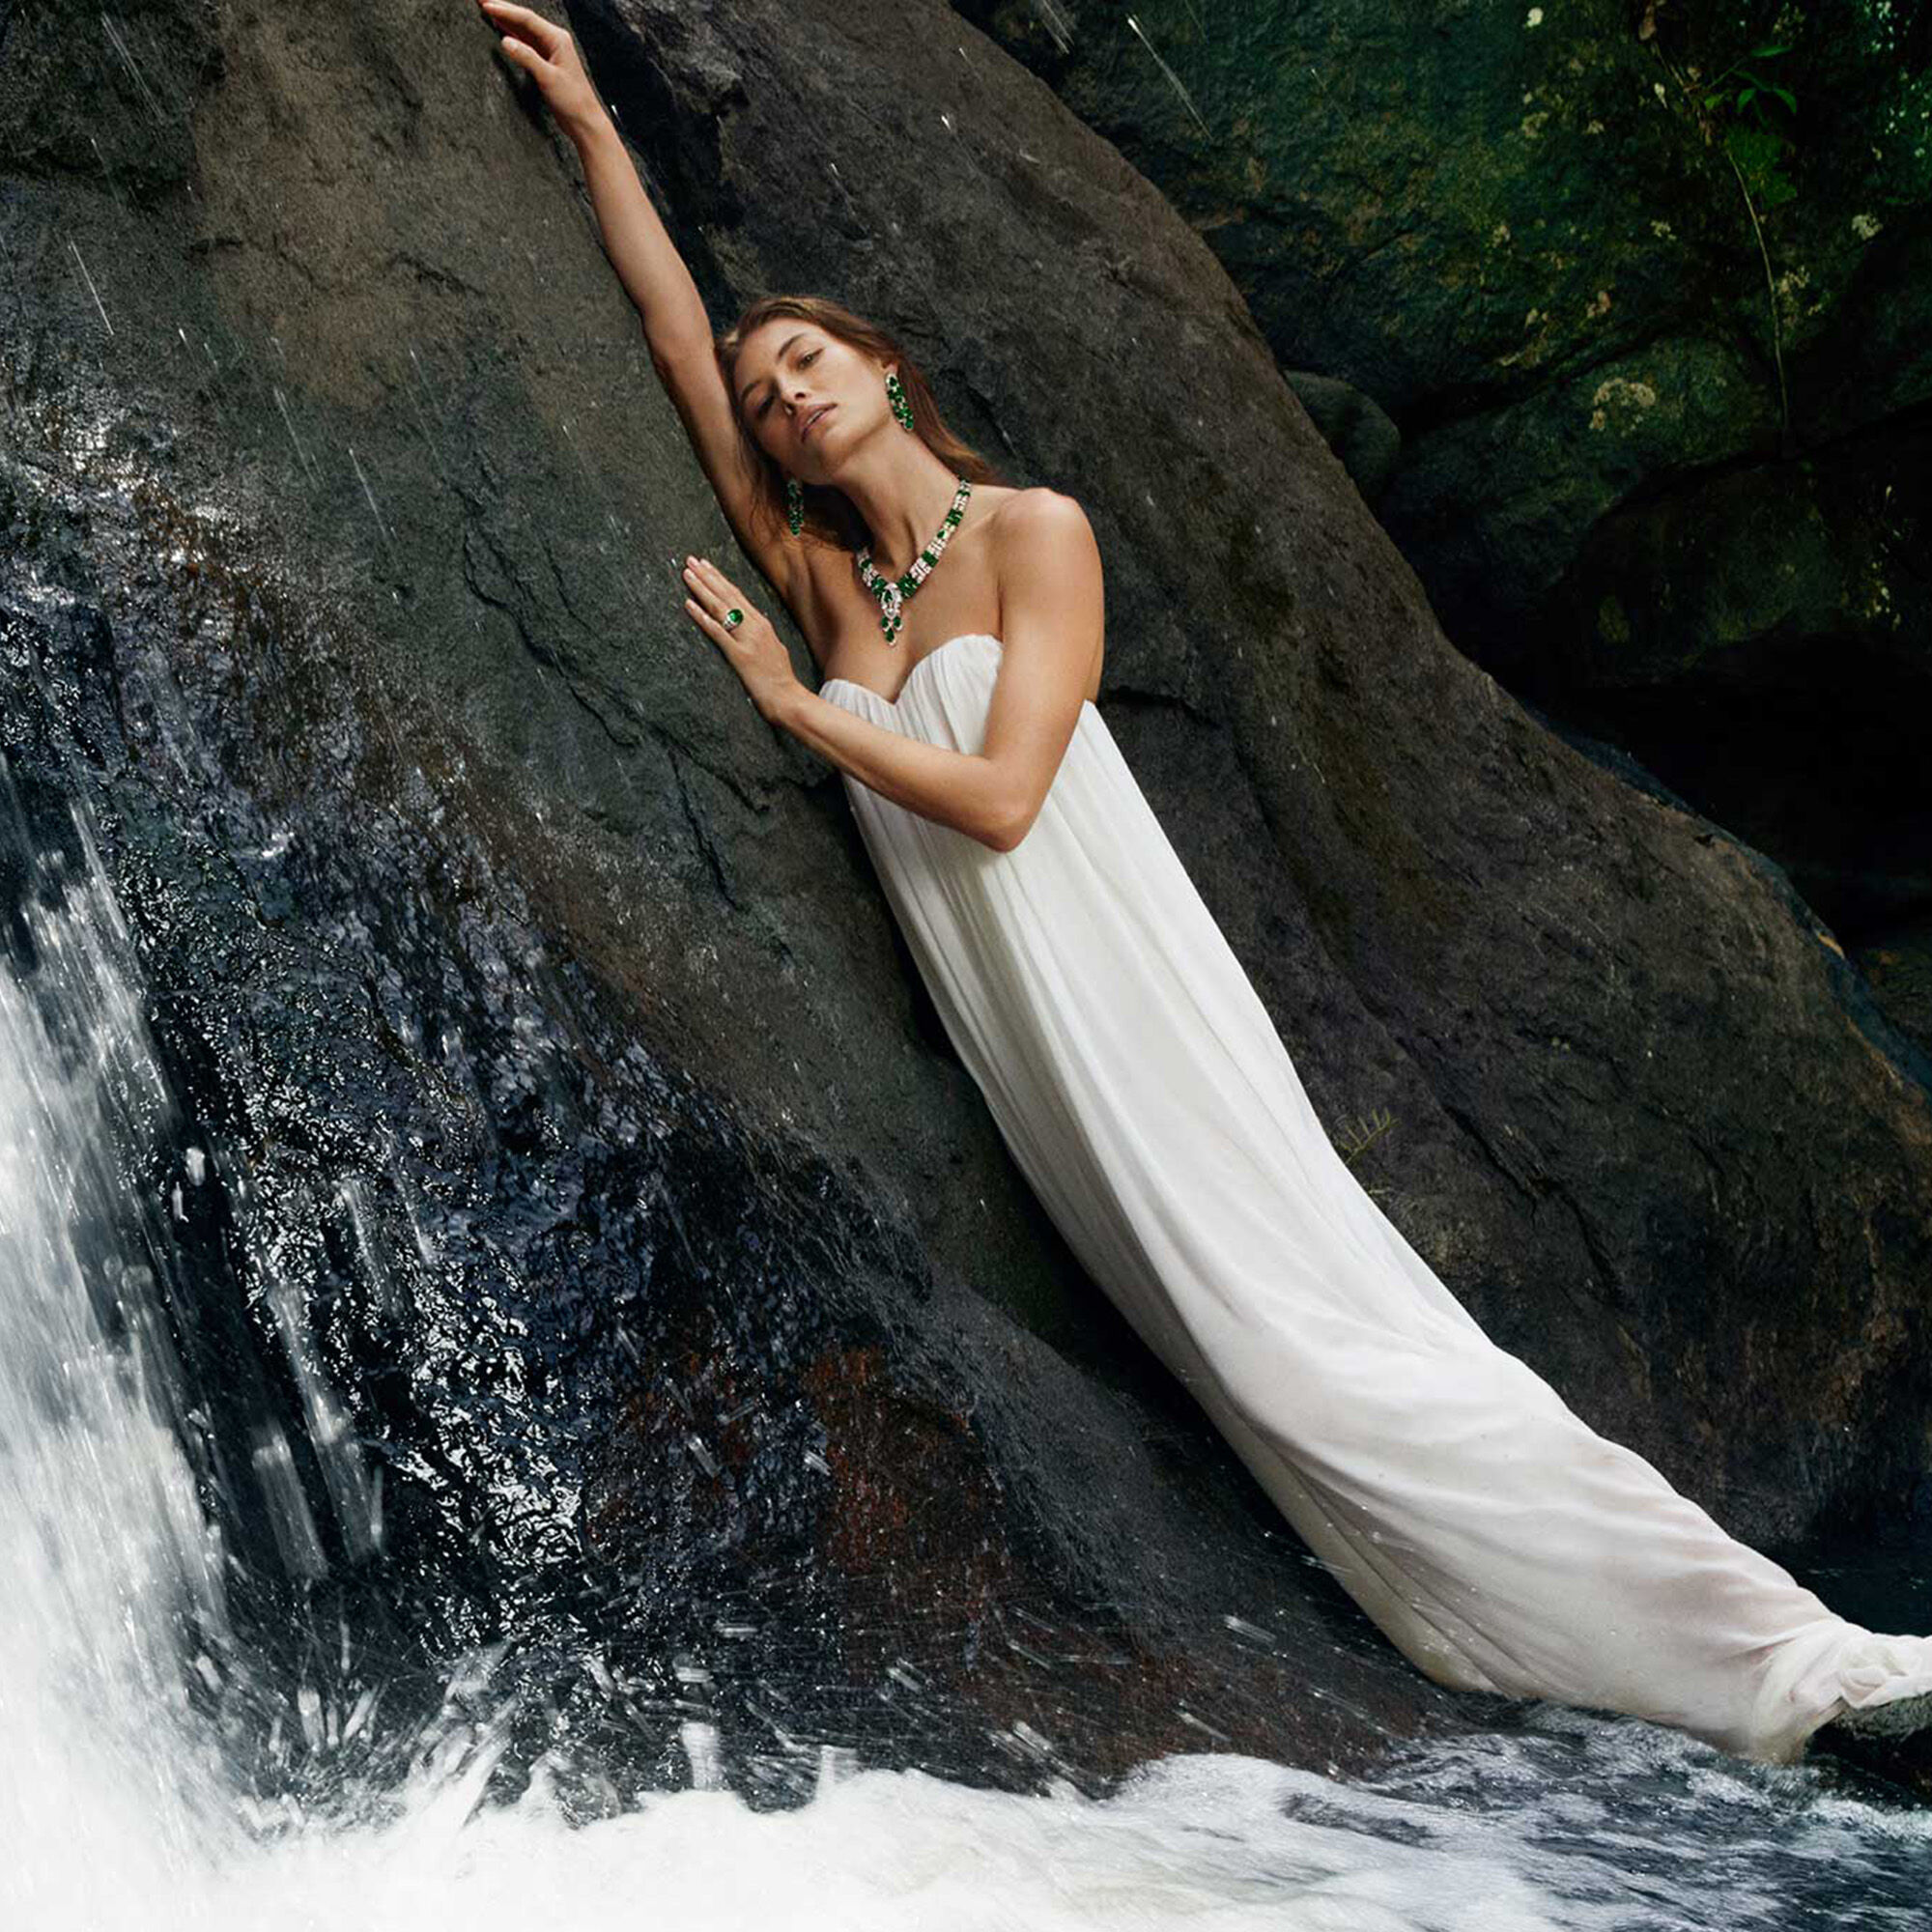 Model wears emerald and white diamond jewellery standing in waterfall